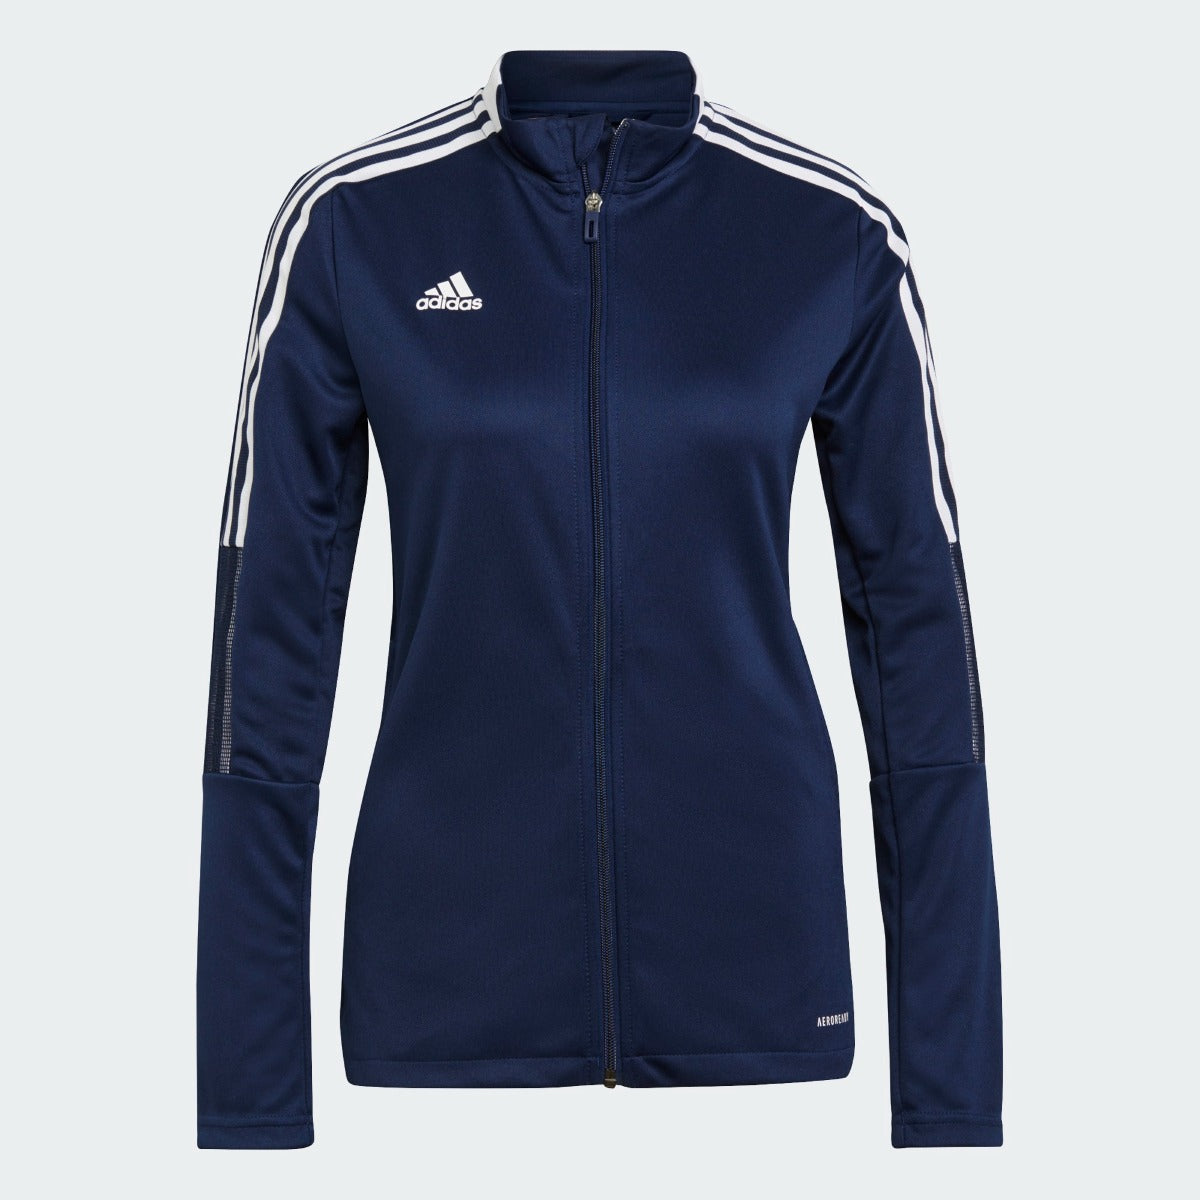 Adidas - Women's Textured Mixed Media Full-Zip Jacket - A529 - Walmart.com